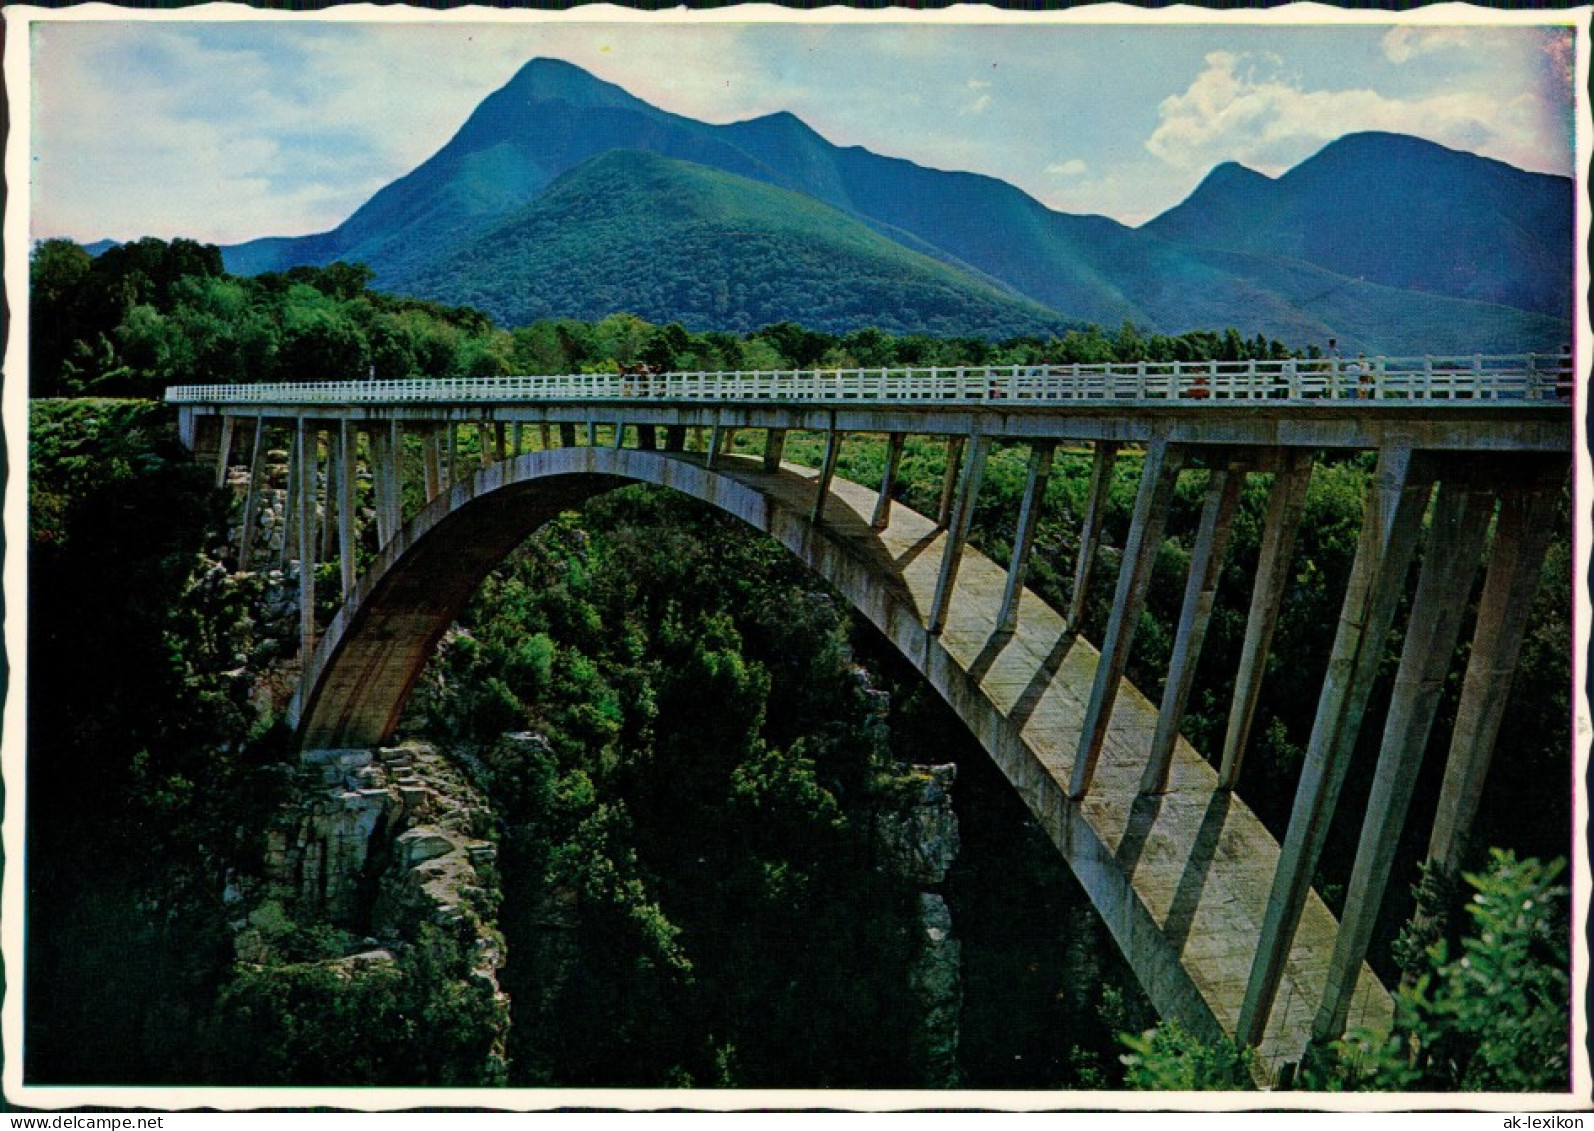 Stormsrivier-Kou-Kamma Paul Sauer Bridge, Storms River Bridge, Garten Route 1980 - Südafrika